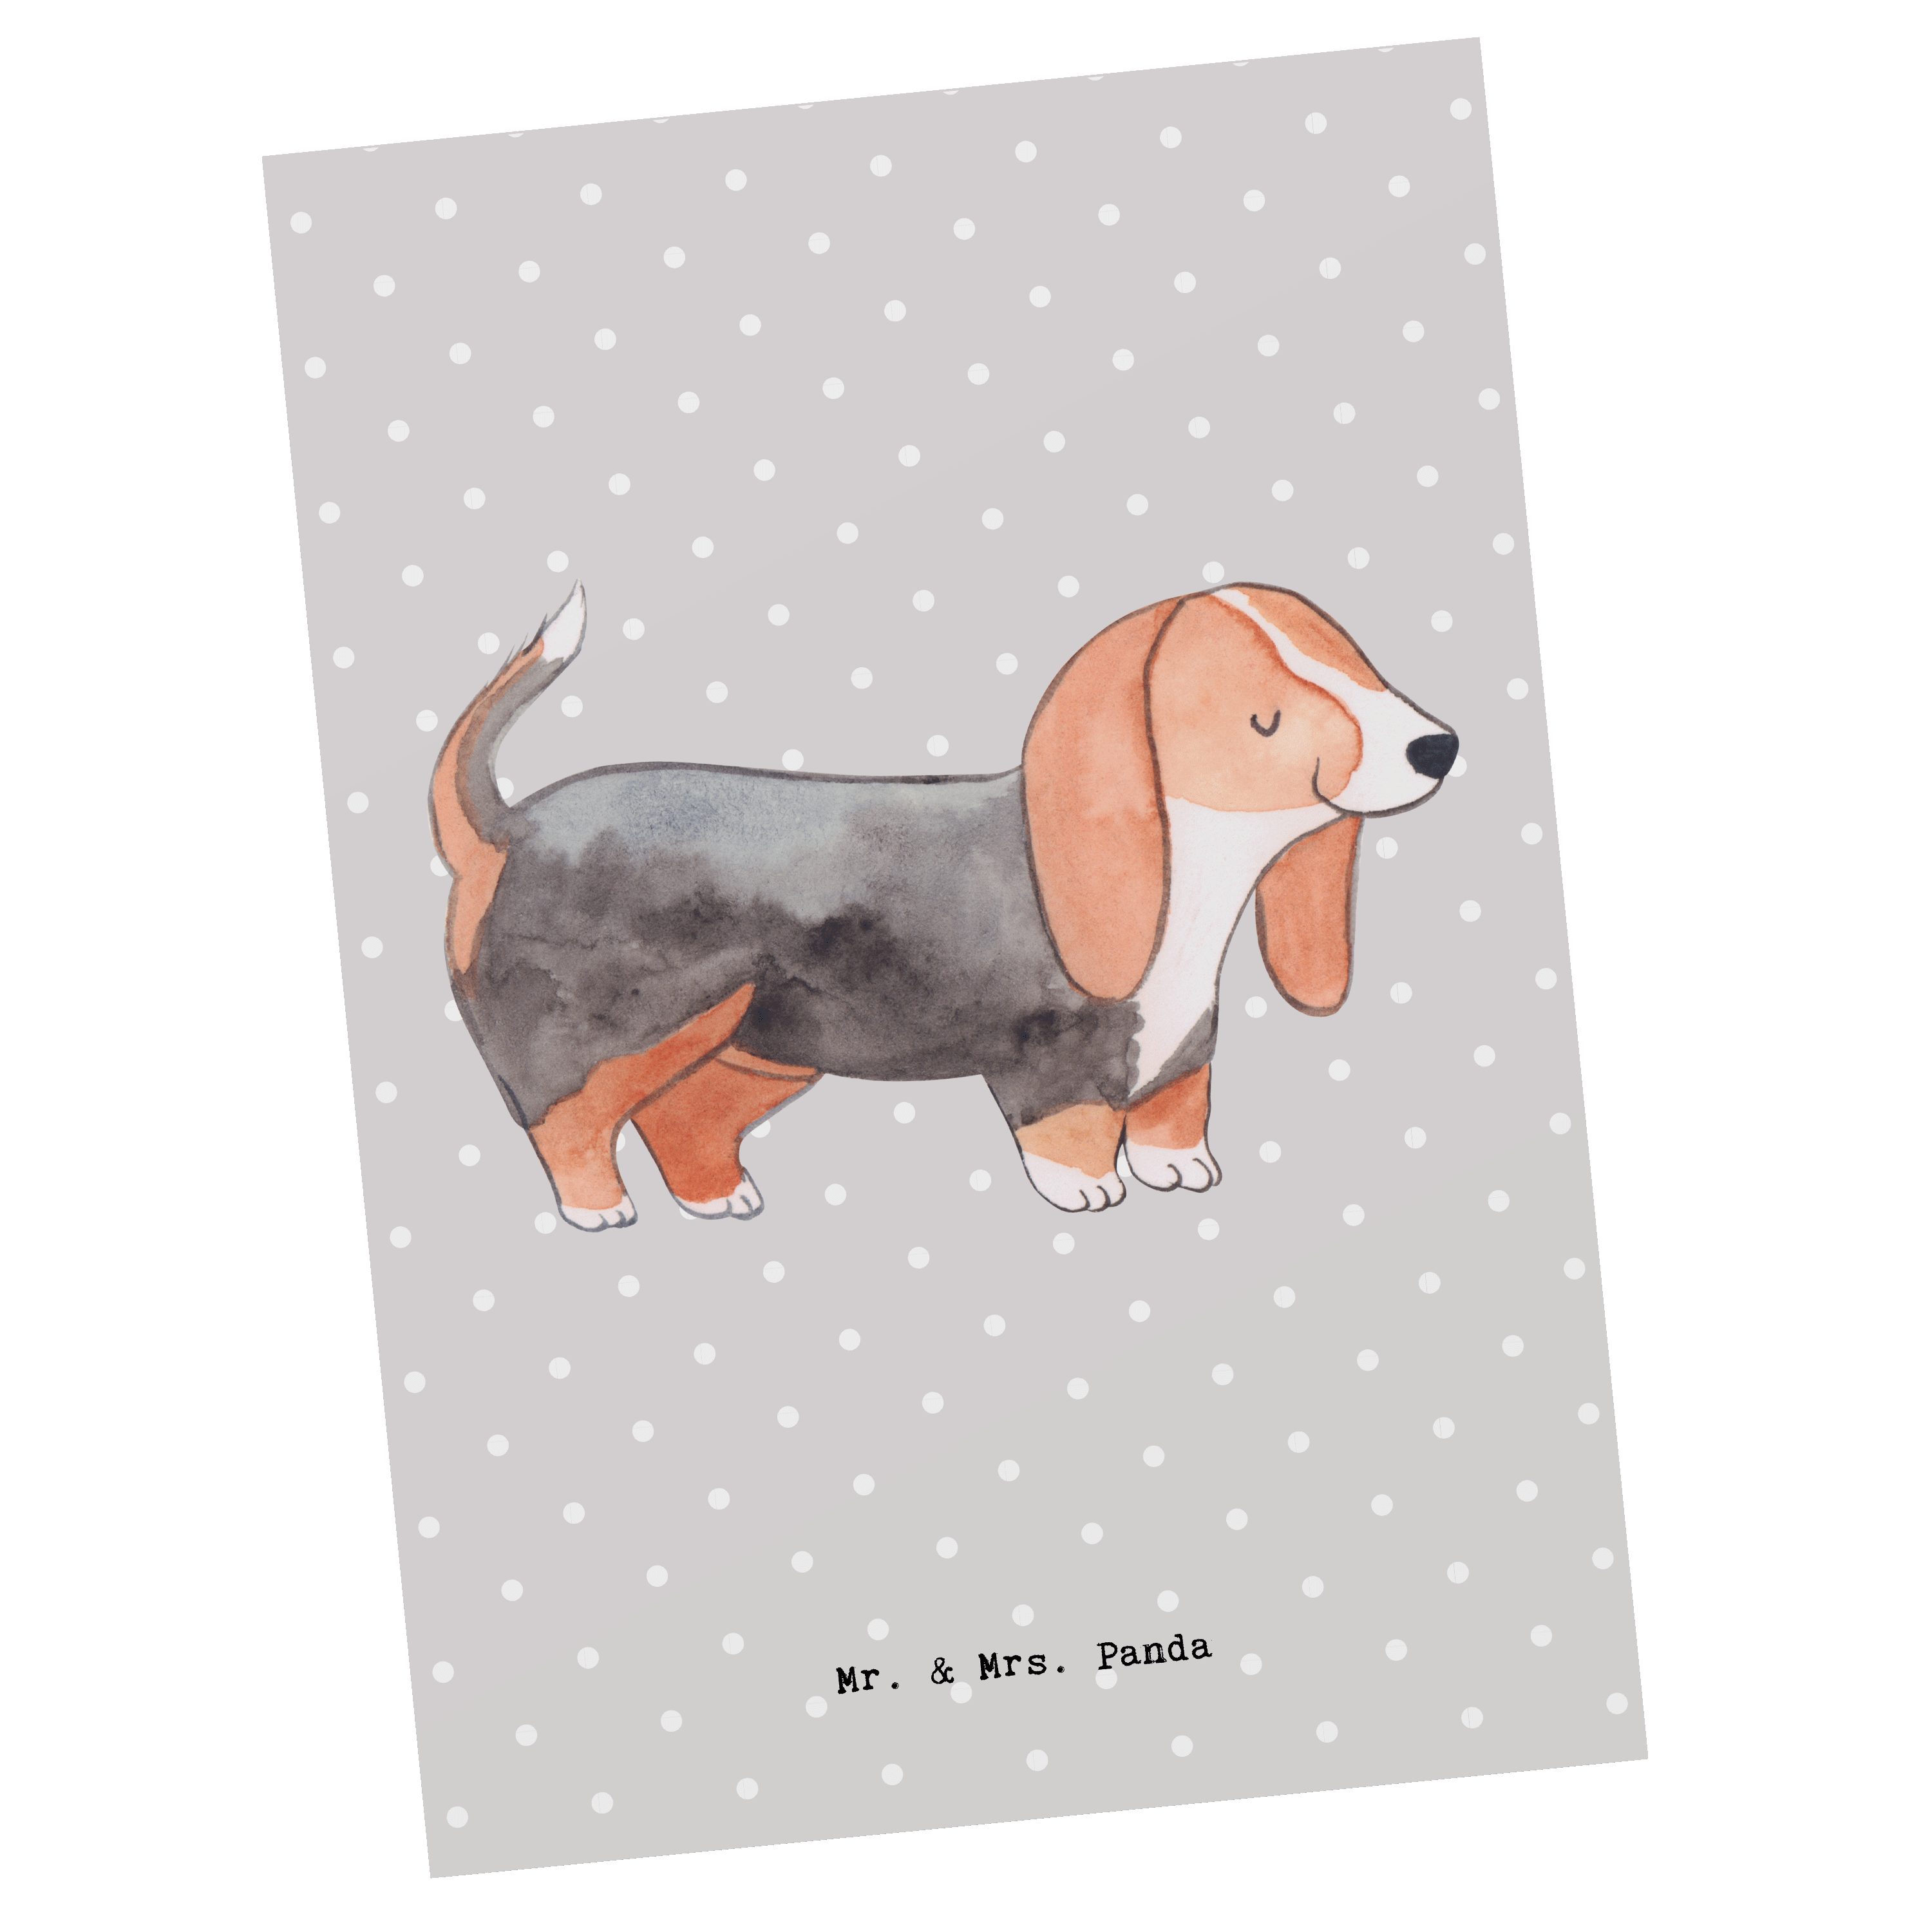 Mr. & Mrs. Panda Postkarte Basset Hound Moment - Grau Pastell - Geschenk, Karte, Welpe, Ansichts